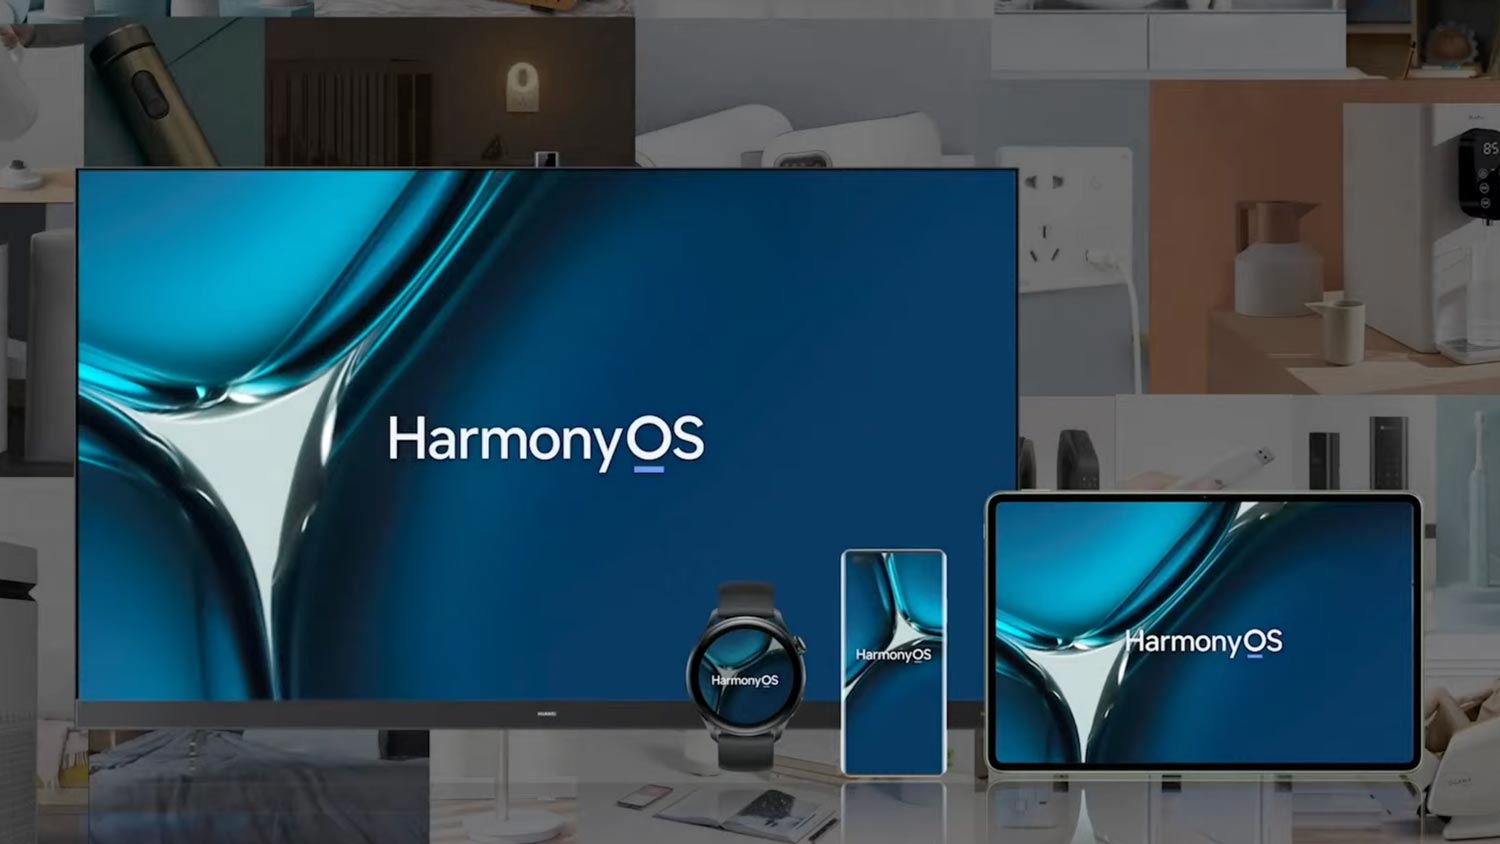 HarmonyOS 2 Kini Digunakan Di Lebih 70 Juta Peranti